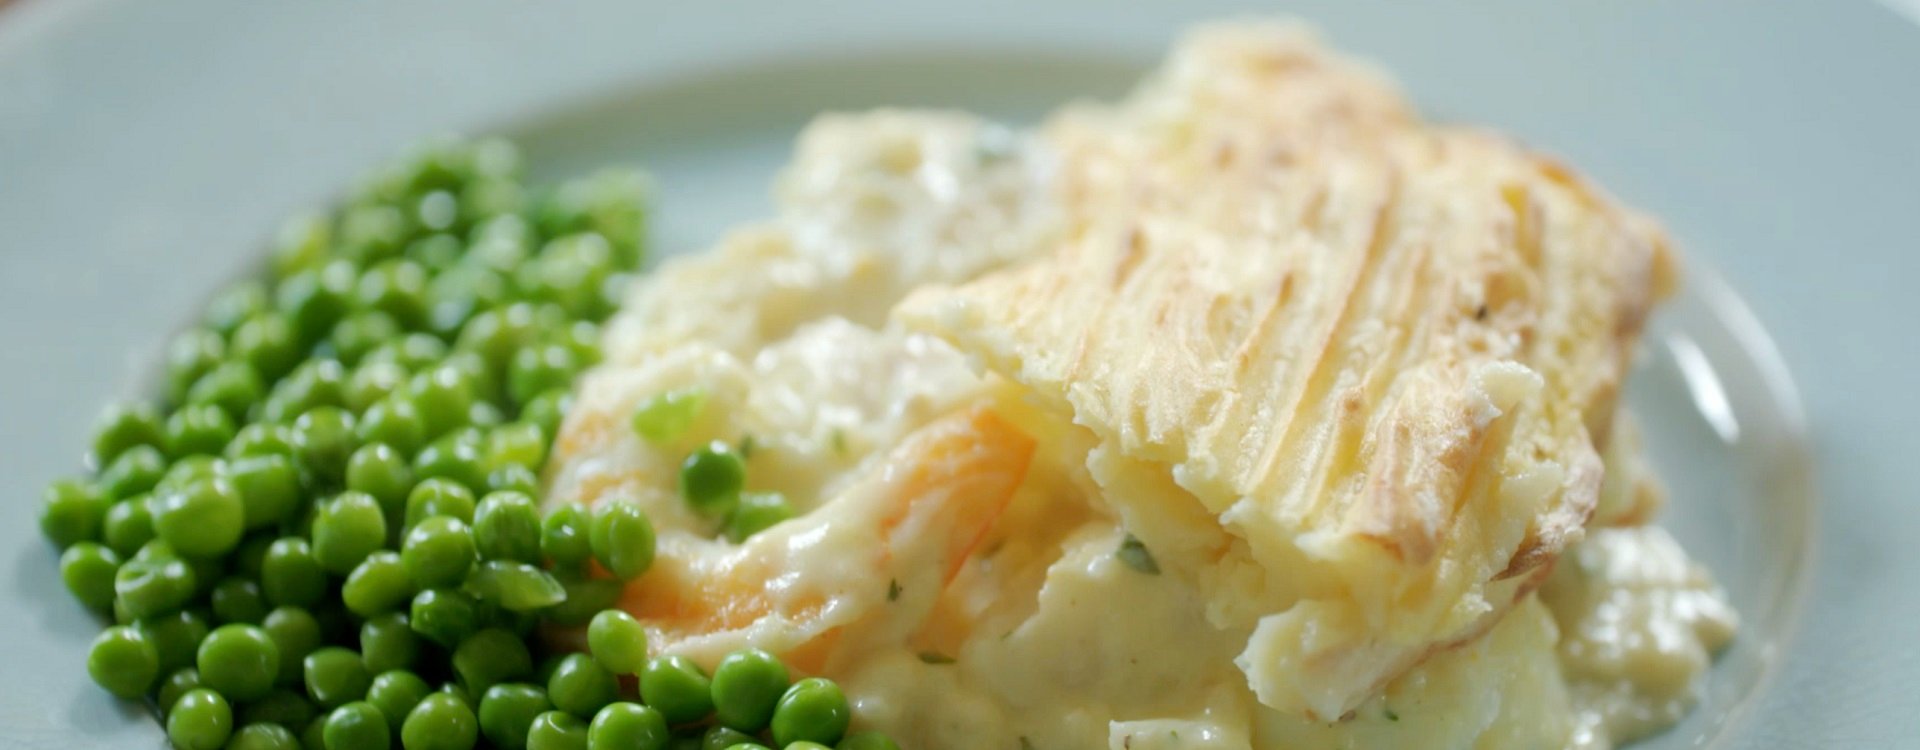 Rick-Steins-Cornwall-Fish-Pie-Recipe